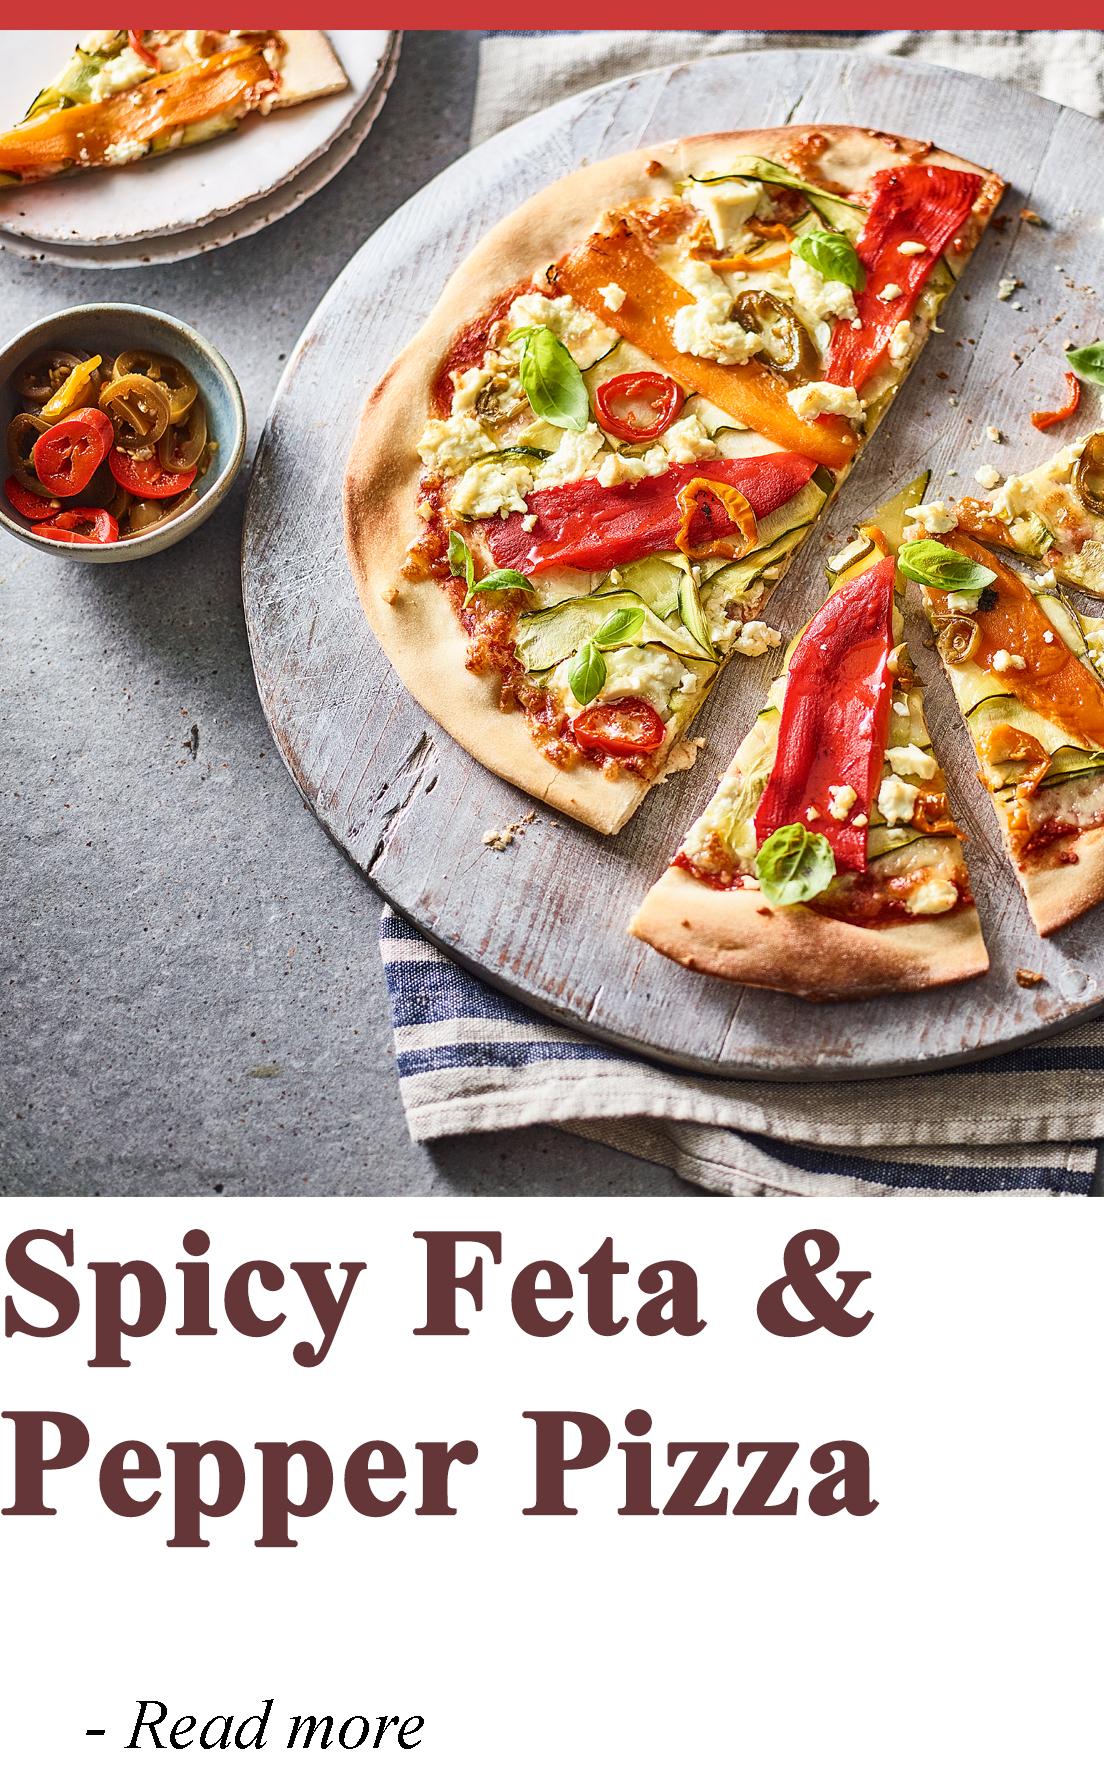 Spicy Feta & Pepper Pizza Recipe Thumbnail.jpg